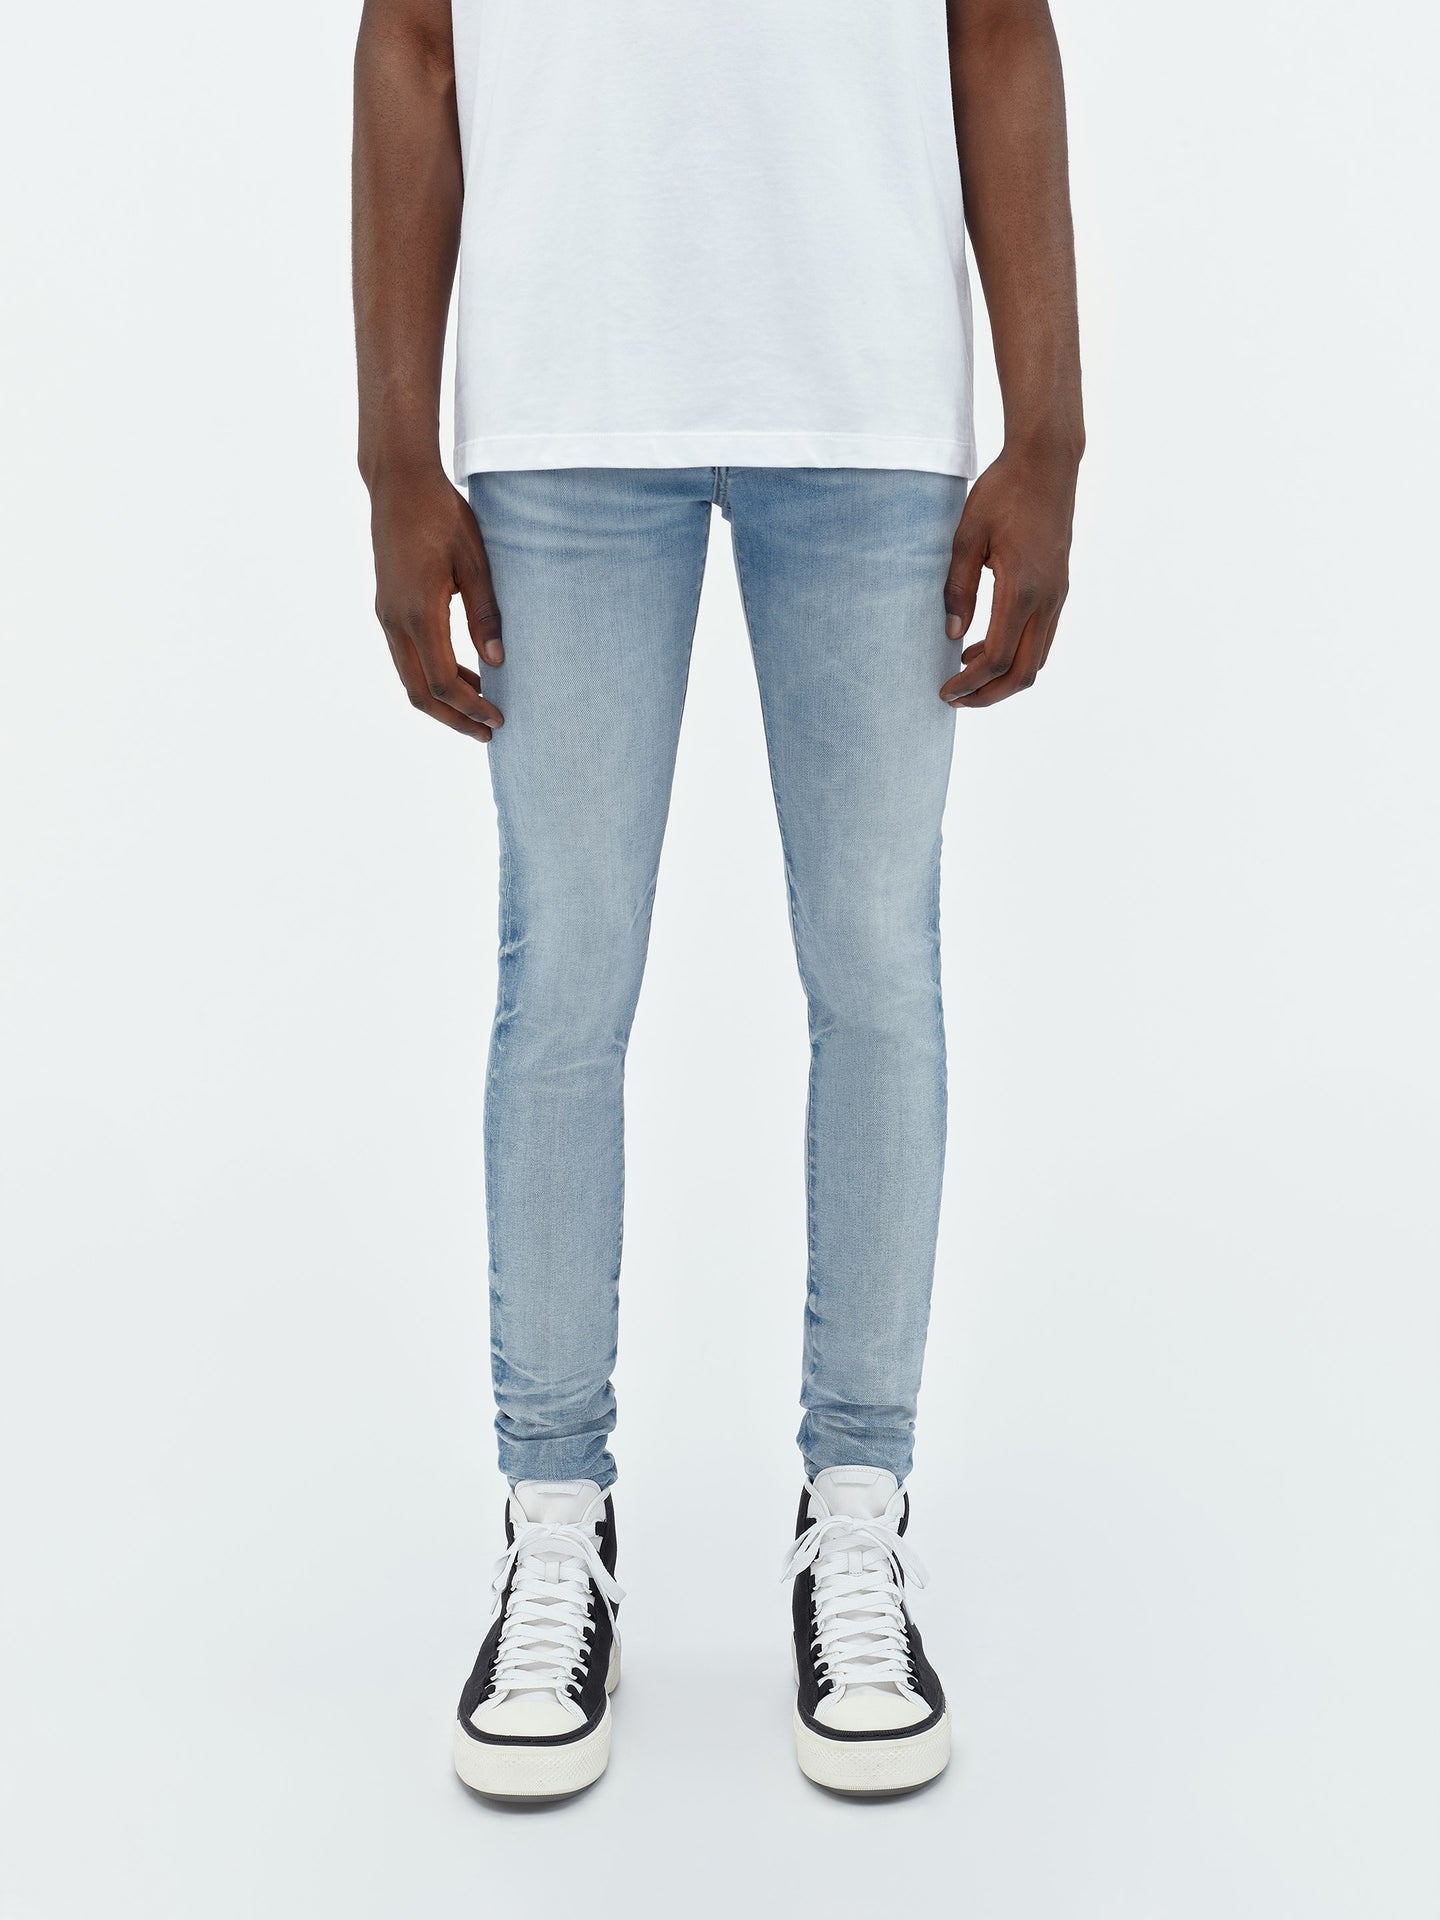 Amiri Jeans - STACK JEANS - Clique Apparel